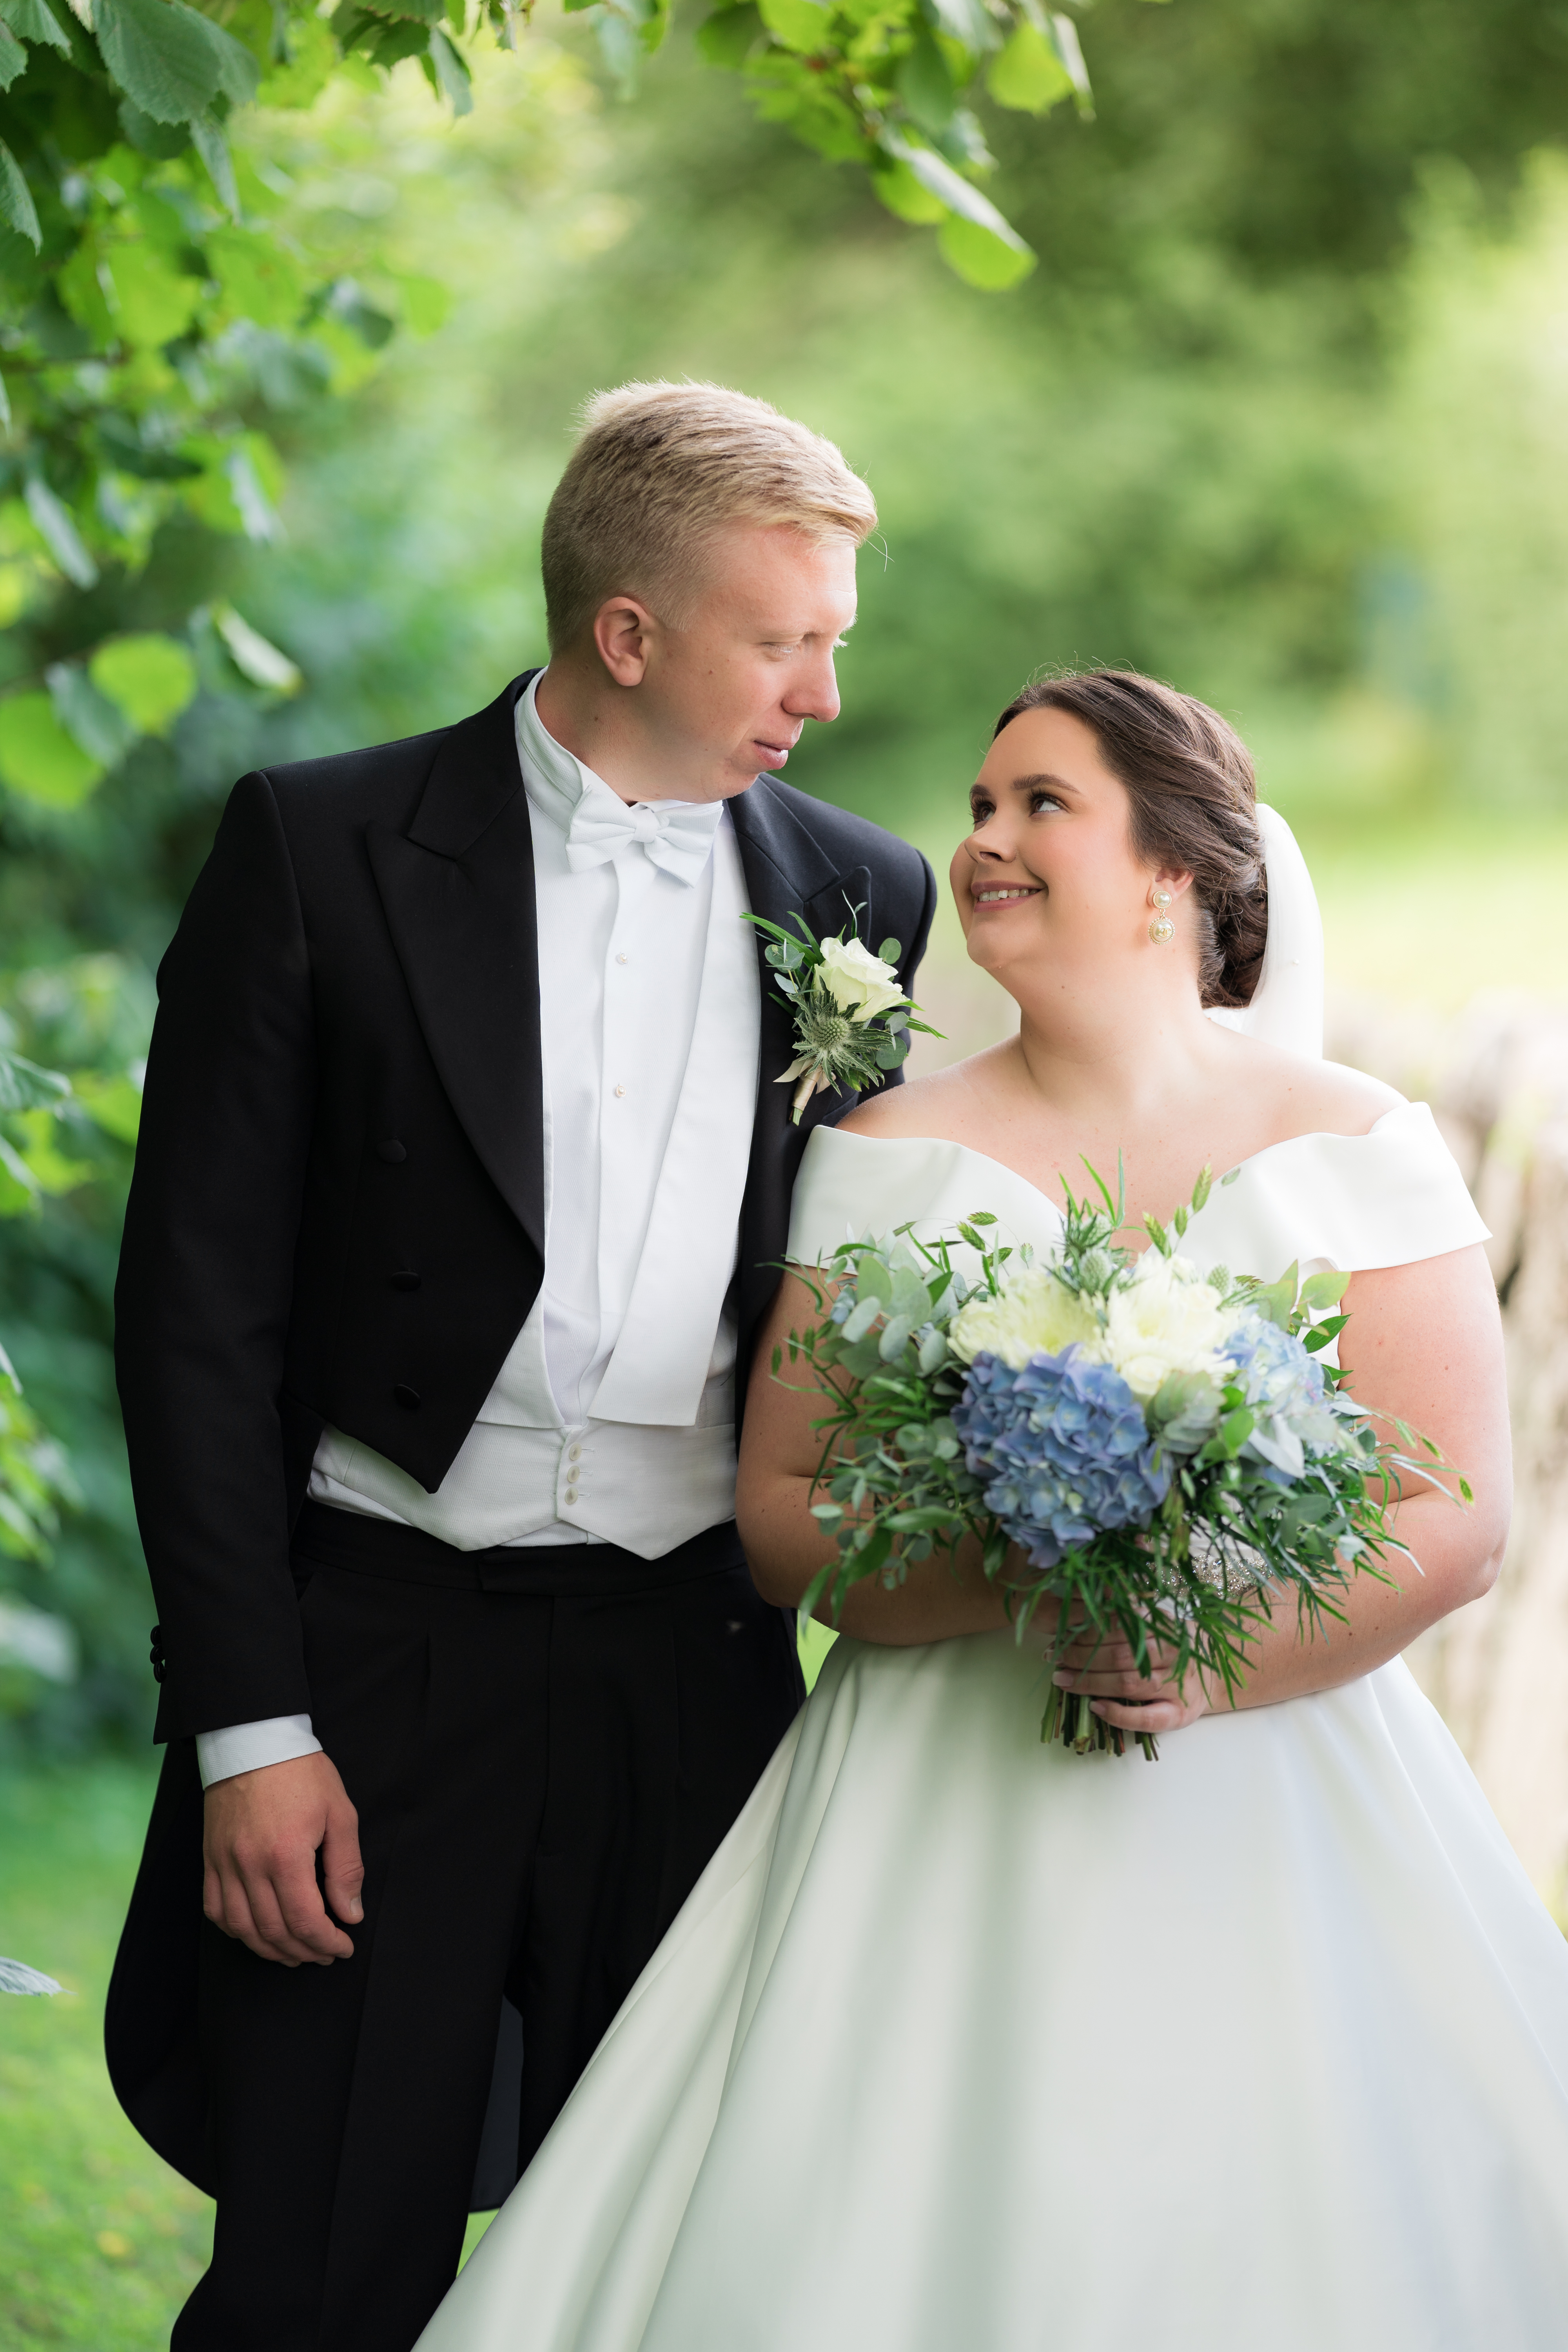 Bröllopspar fotograferat av Langes fotografering i Motala. konstjakt.se